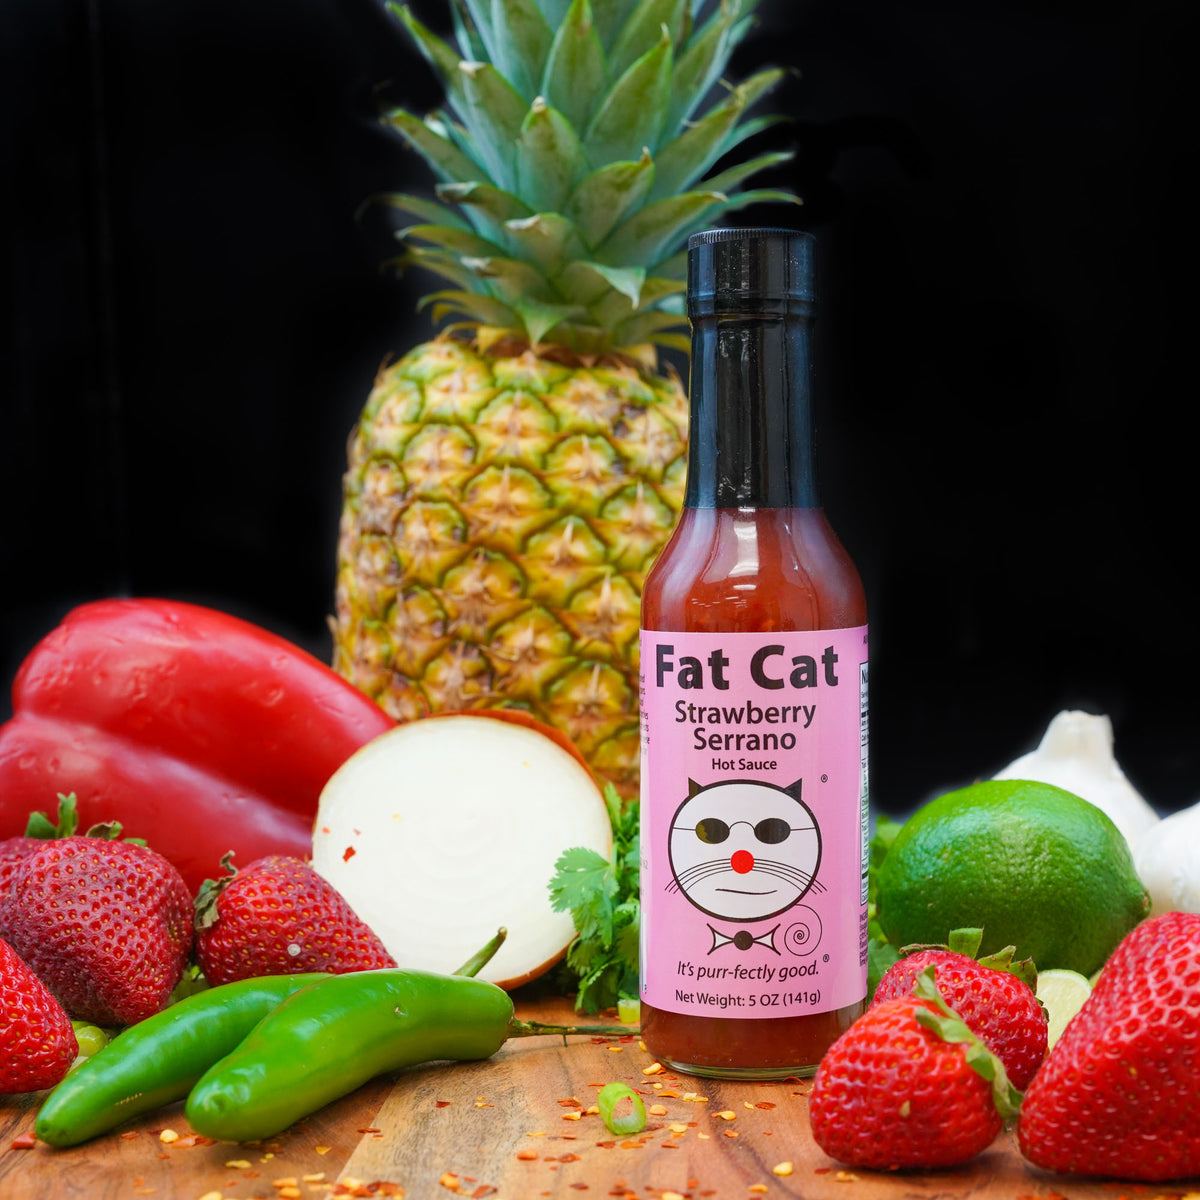 Strawberry Serrano Hot Sauce (Wholesale) - Fat Cat Gourmet Hot Sauce & Specialty Condiments